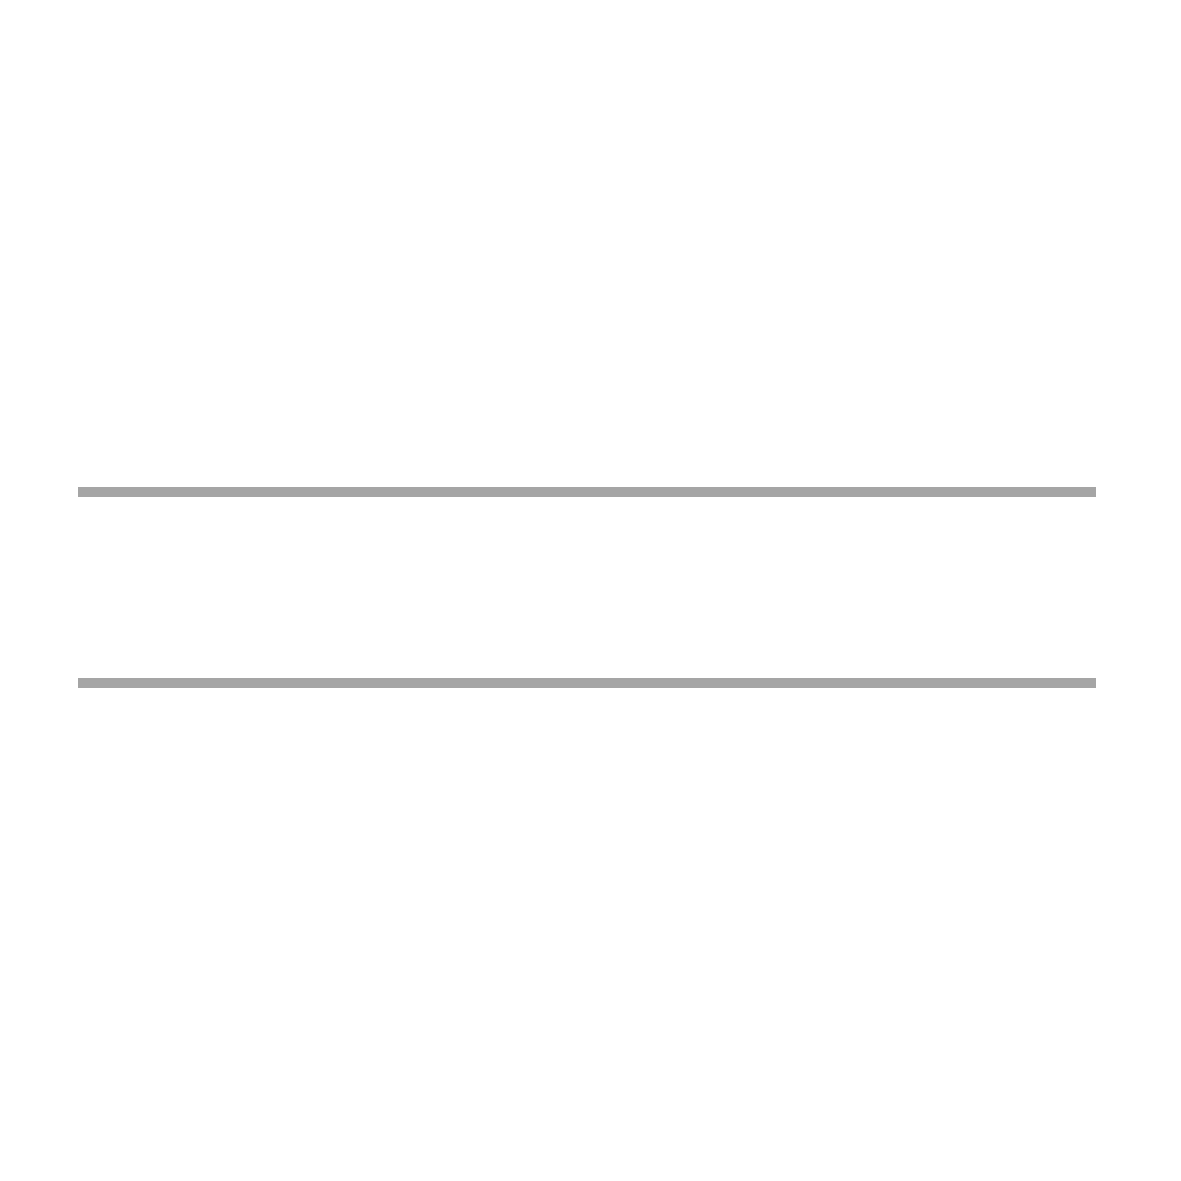 Edinburgh bathroom installers logo